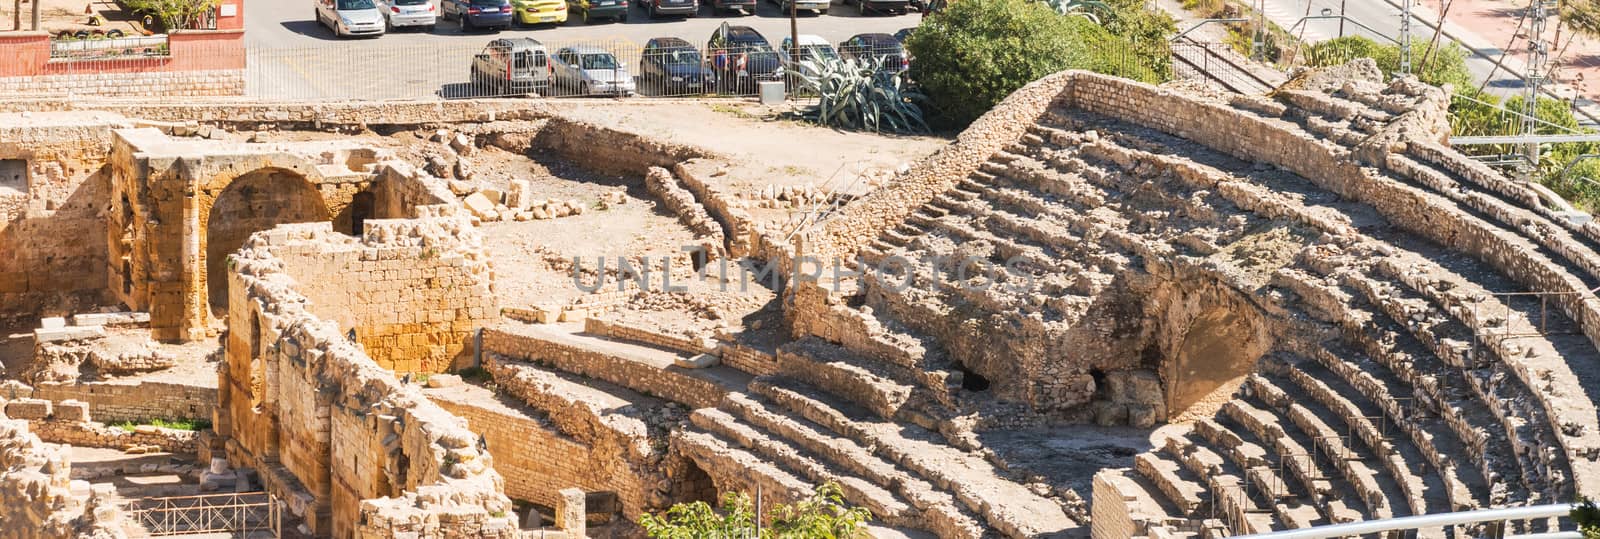 Roman Amphitheatre in Tarragona Spain by Marcus